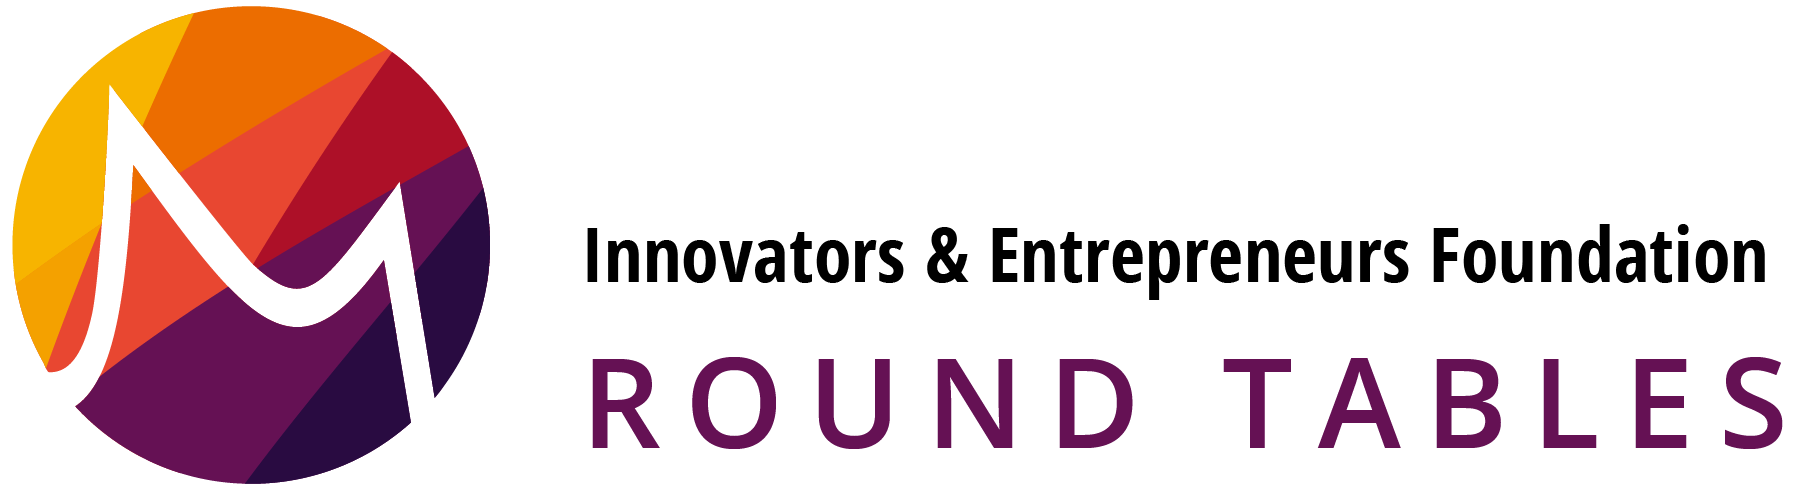 Round Tables logo